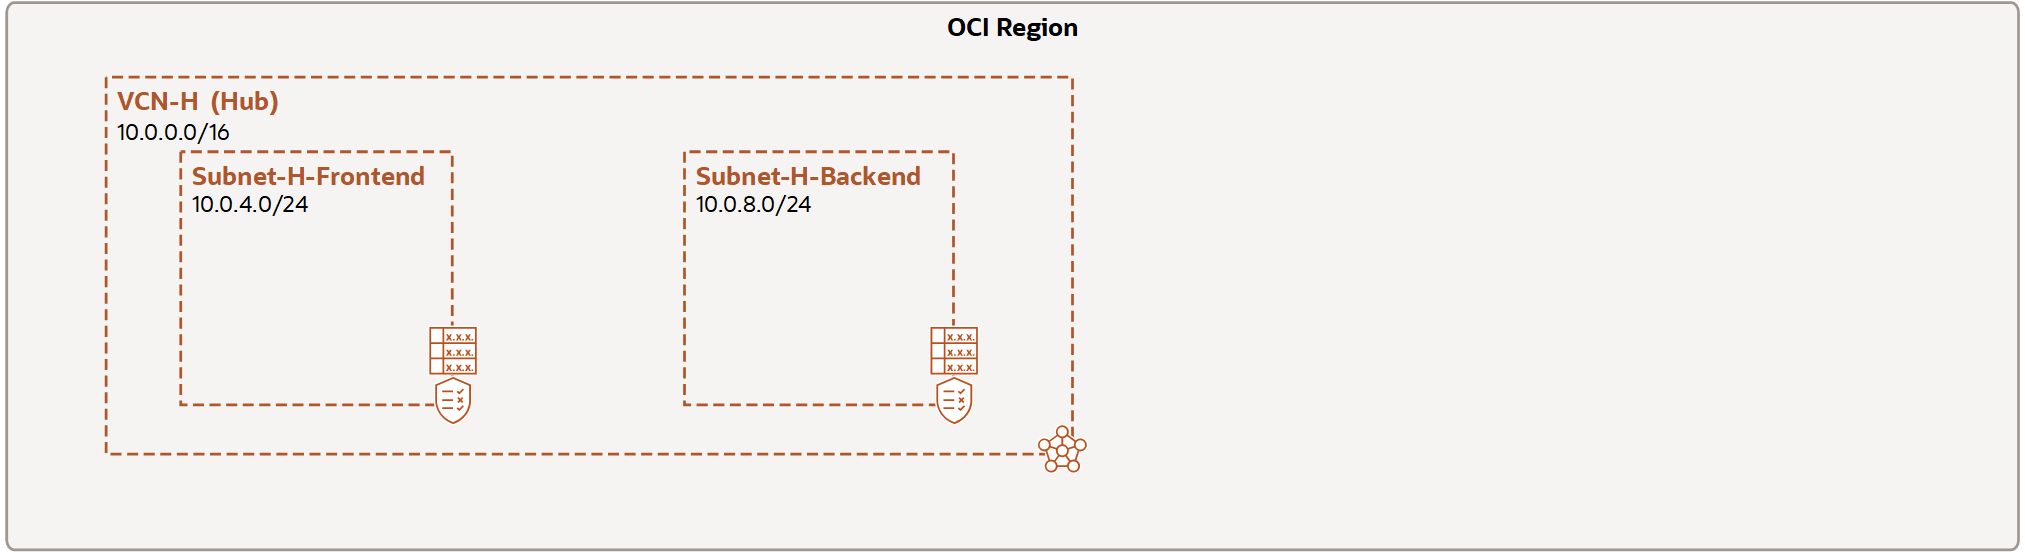 En esta imagen se muestra la tarea 1: configurar la VCN de hub.